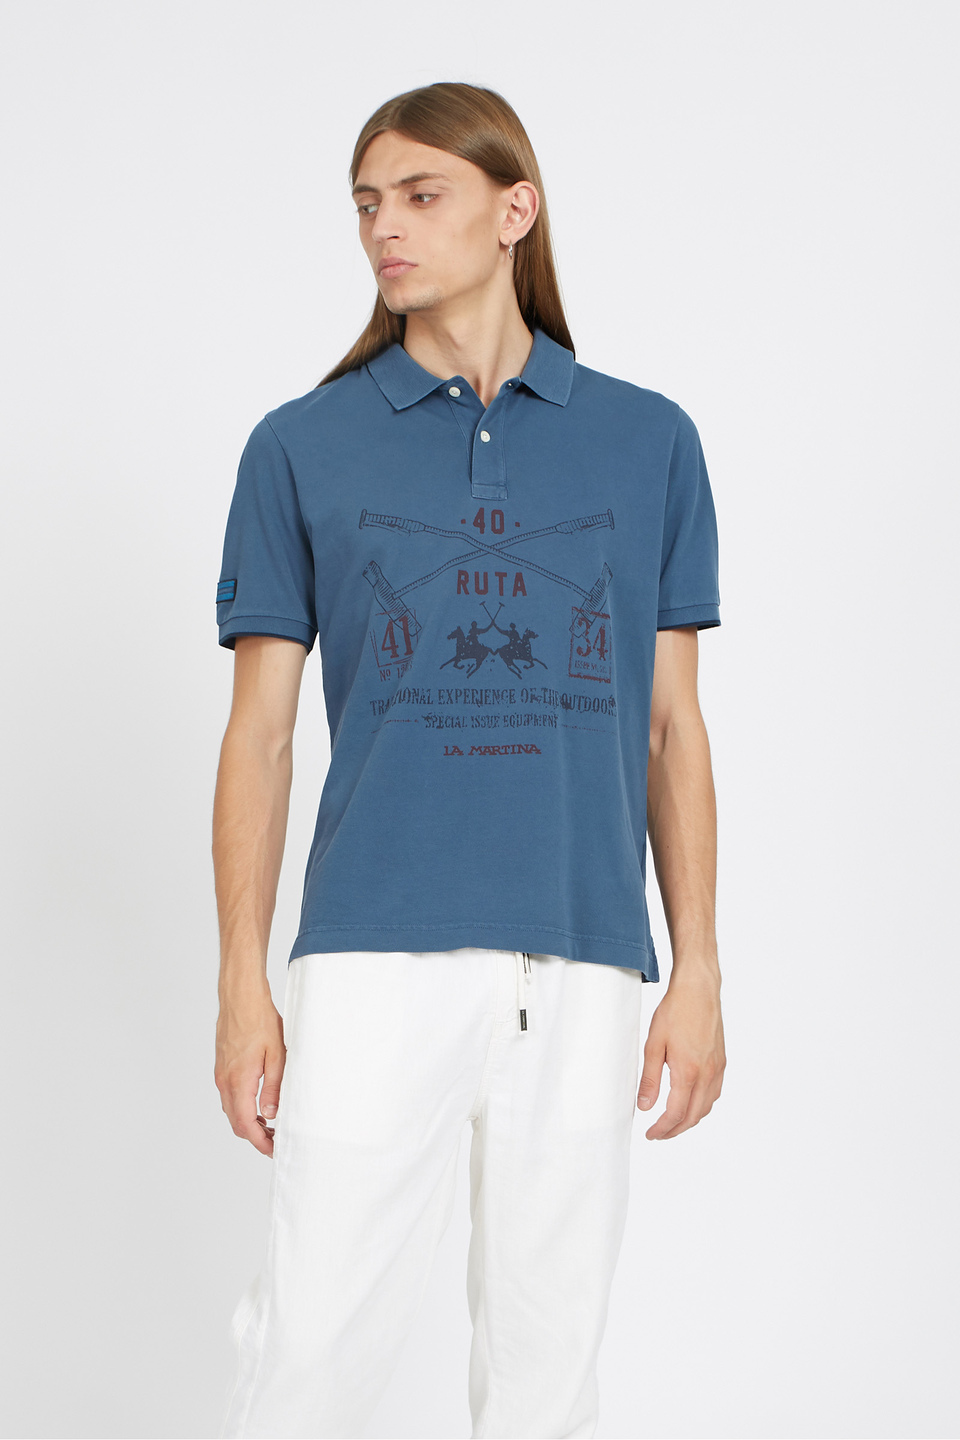 Regular fit 100% cotton short-sleeved polo shirt for men - Varda | La Martina - Official Online Shop